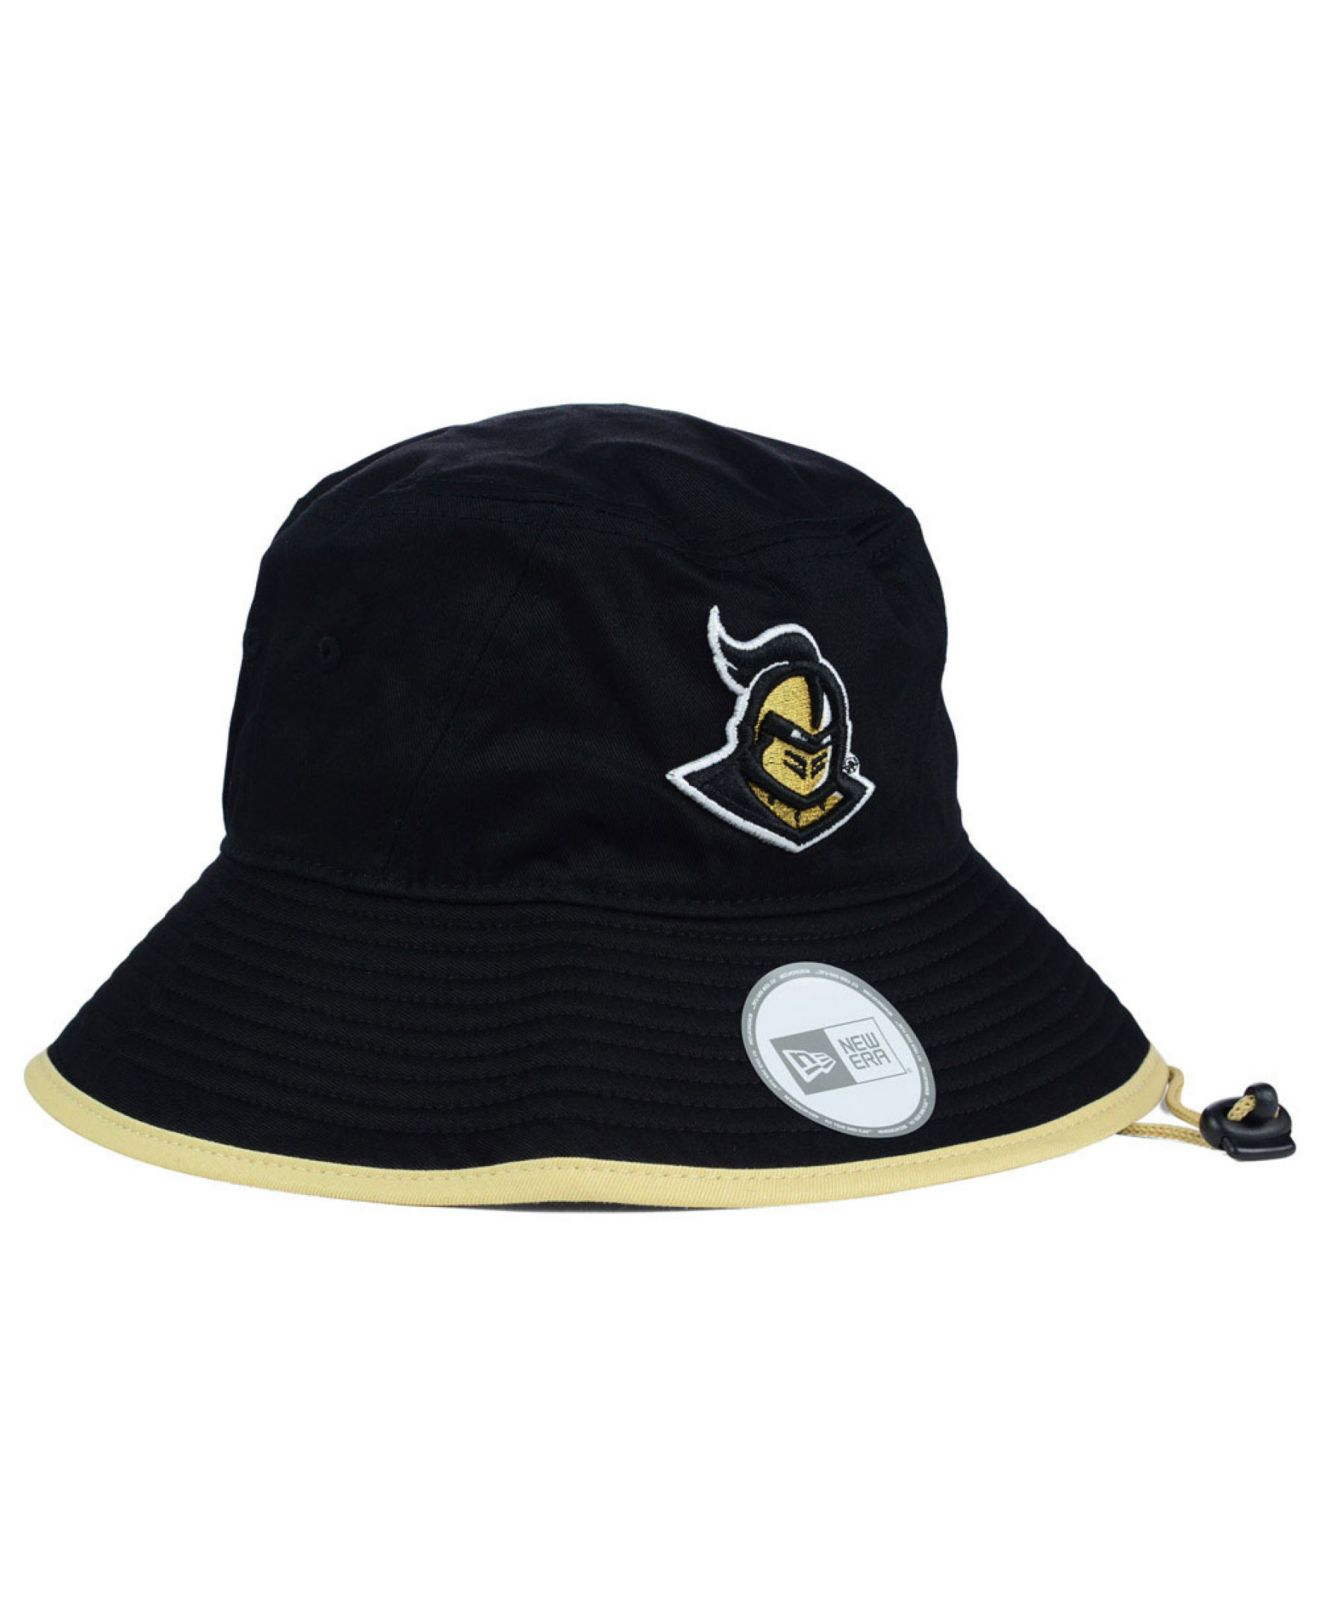 KTZ Ucf Knights Tip Bucket Hat in Black for Men - Lyst